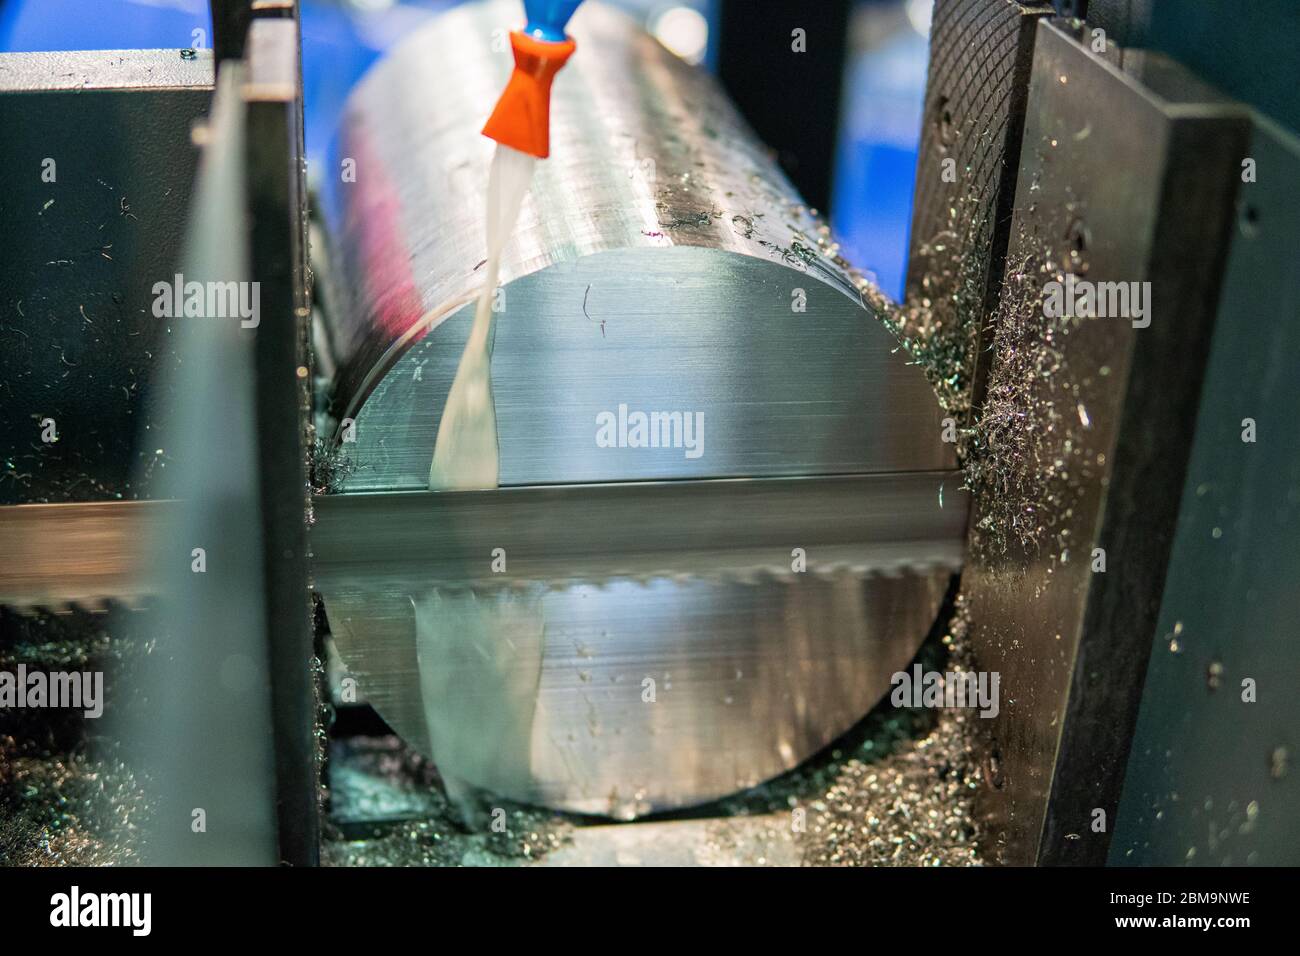 A cutting processes of Aluminium Cylindrical Bar Using Band Saw Machine. Stock Photo